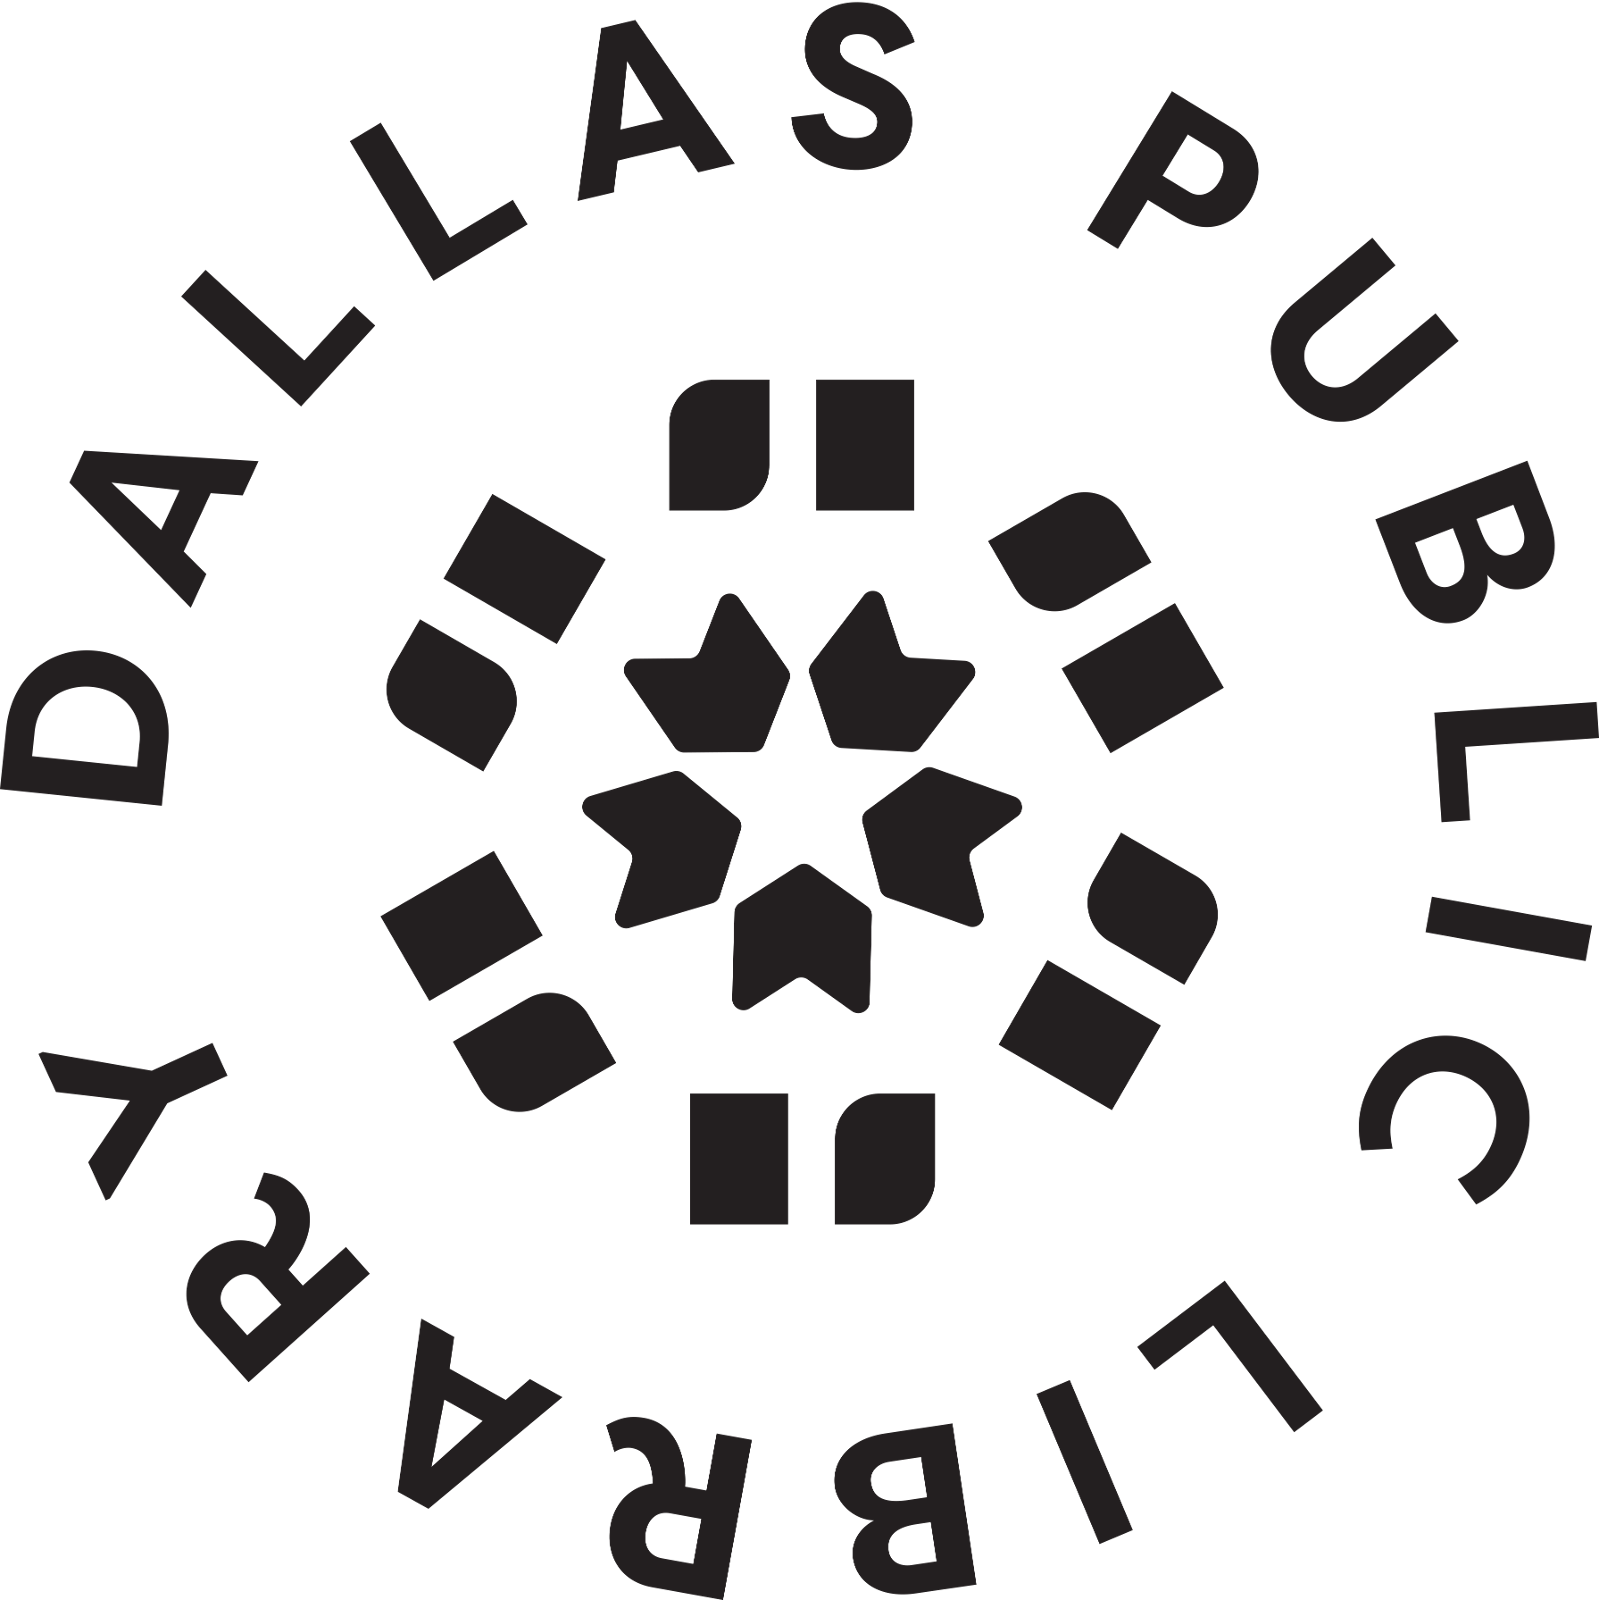 Dallas public library logo black cmyk